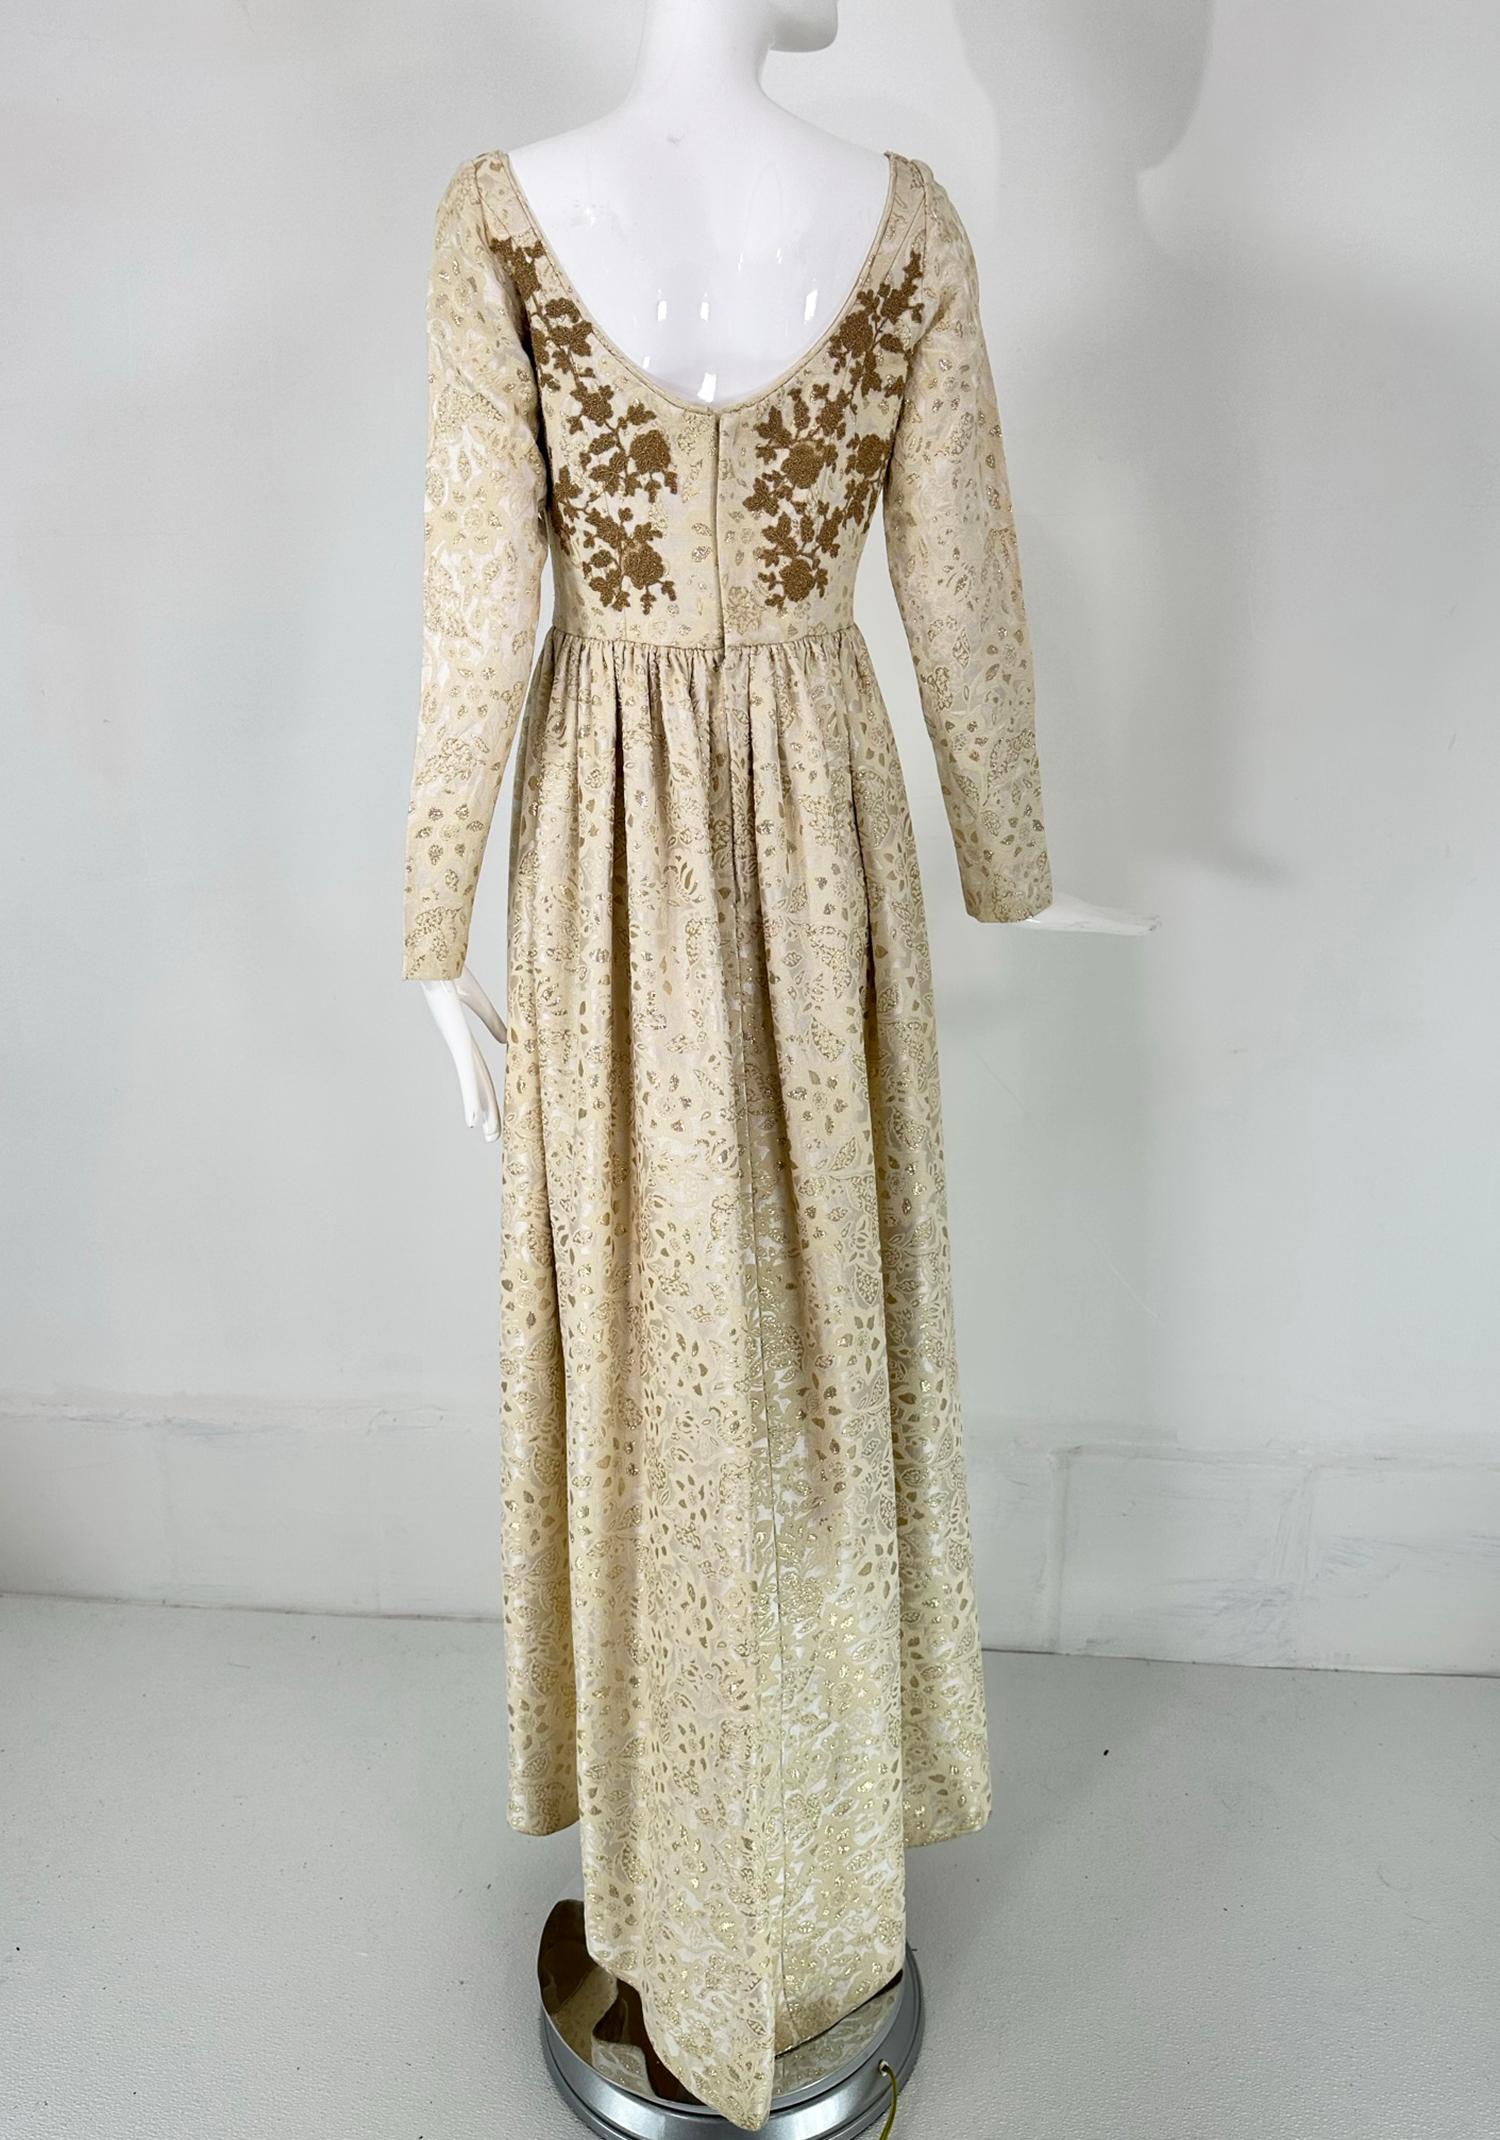 Galitizne Couture Renaissance Style Gown in Cream & Gold Metallic Brocade 1970s For Sale 4